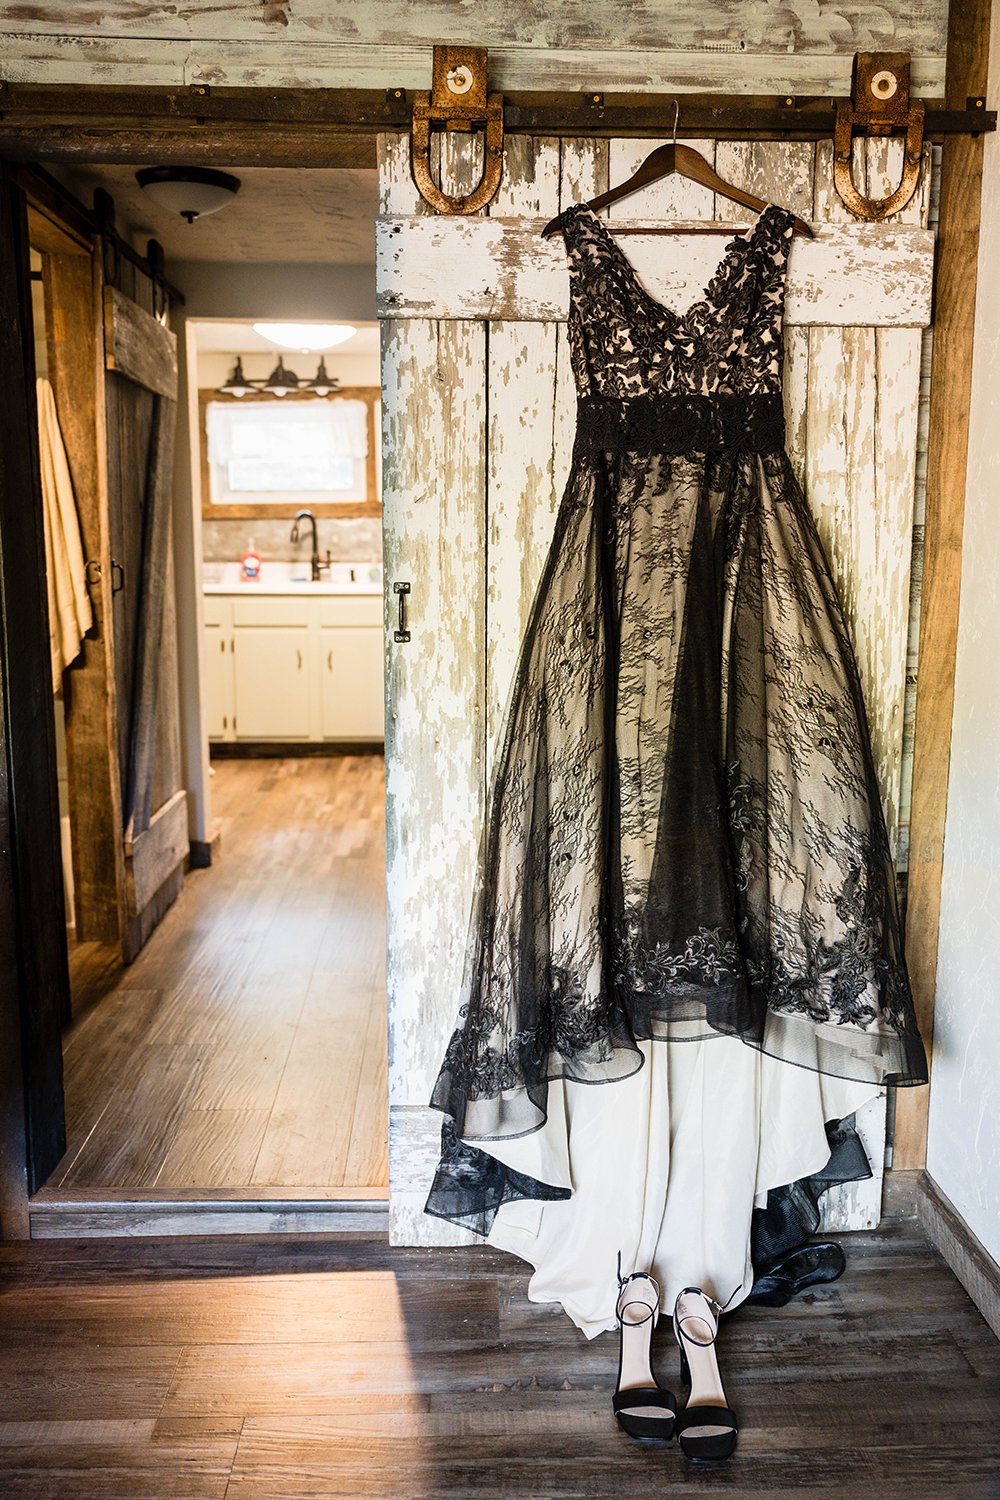 A black wedding dress hangs from a rustic sliding door inside.